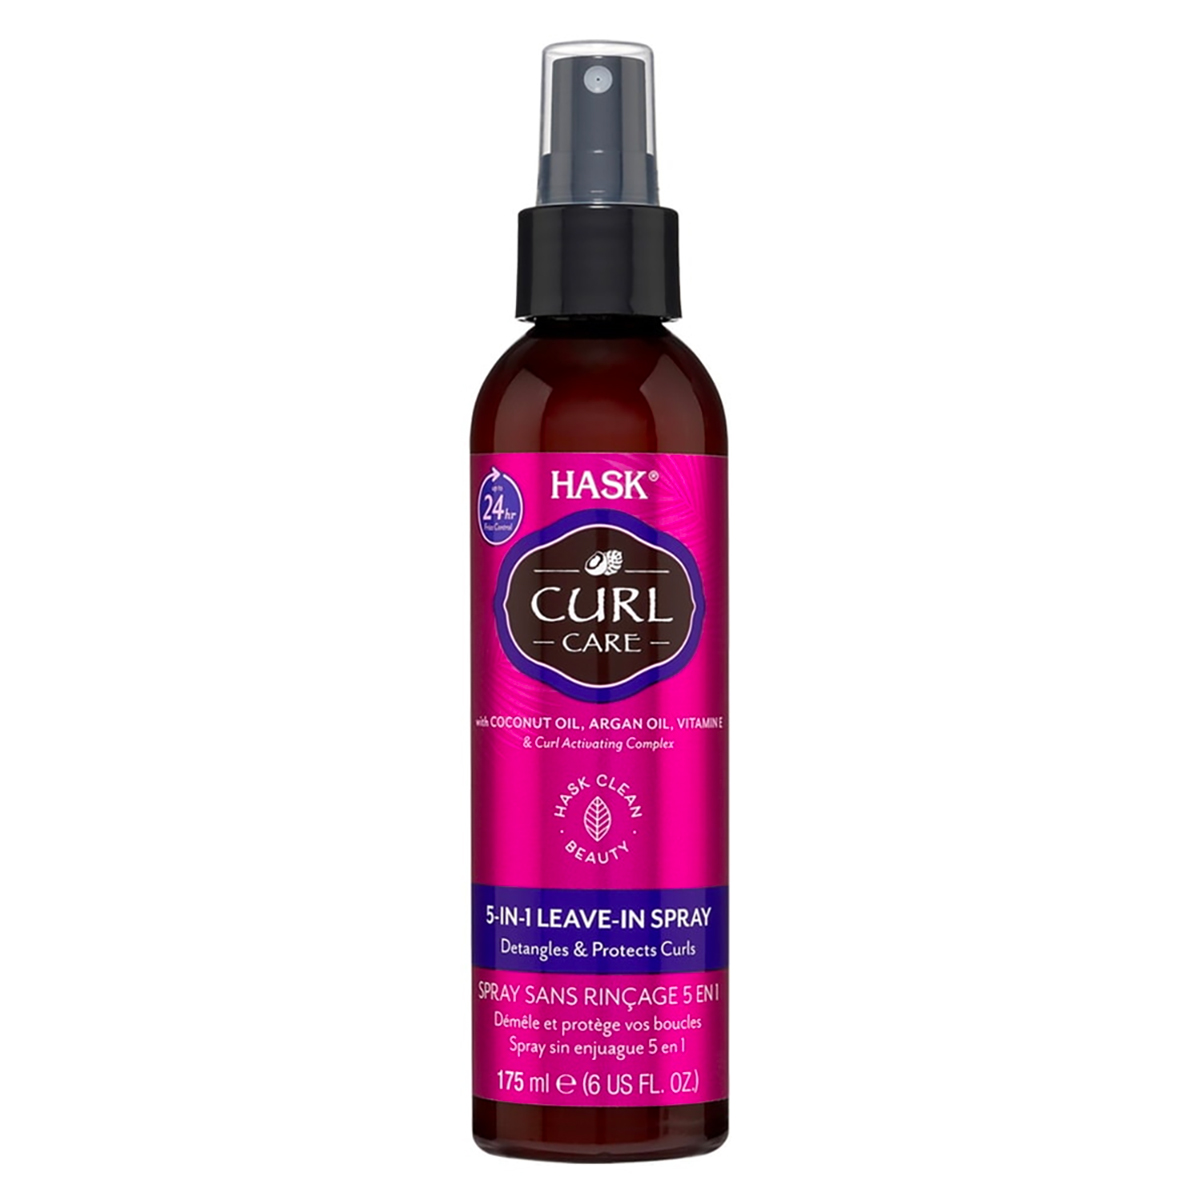 Spray Sans Rinçage 5 en 1 Curl Care Hask 175 ML